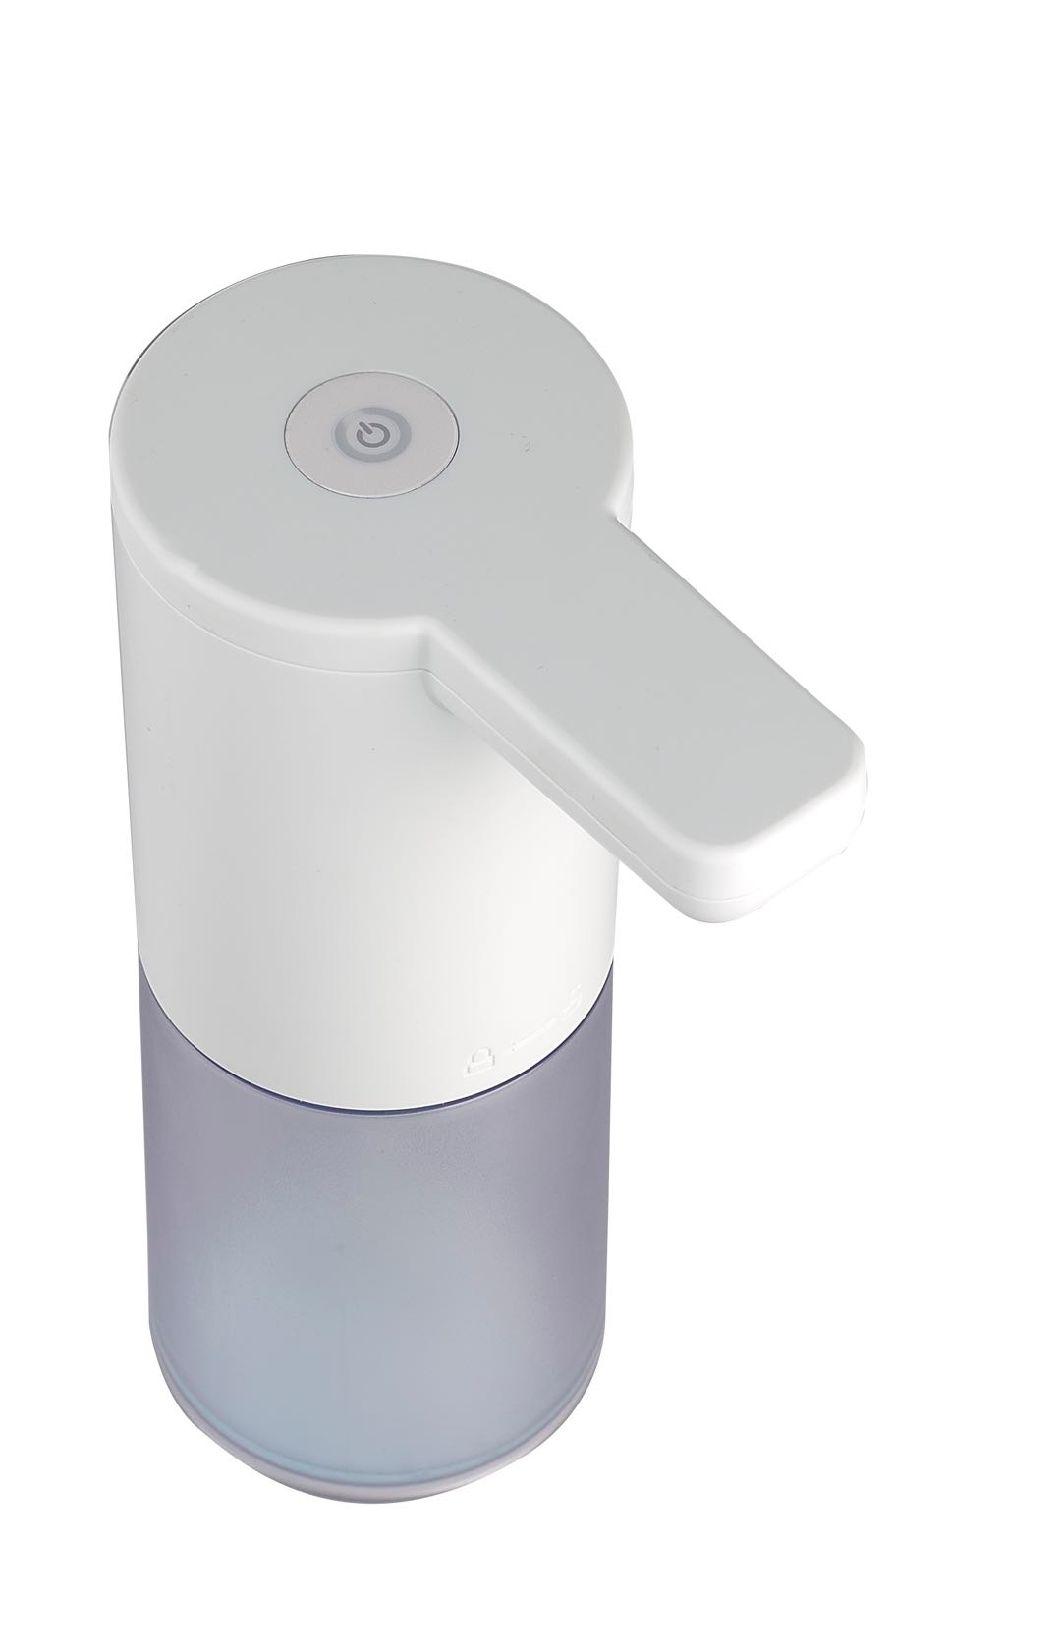 Automatic Soap Dispenser Electric Touchless Foaming Soap Dispenser